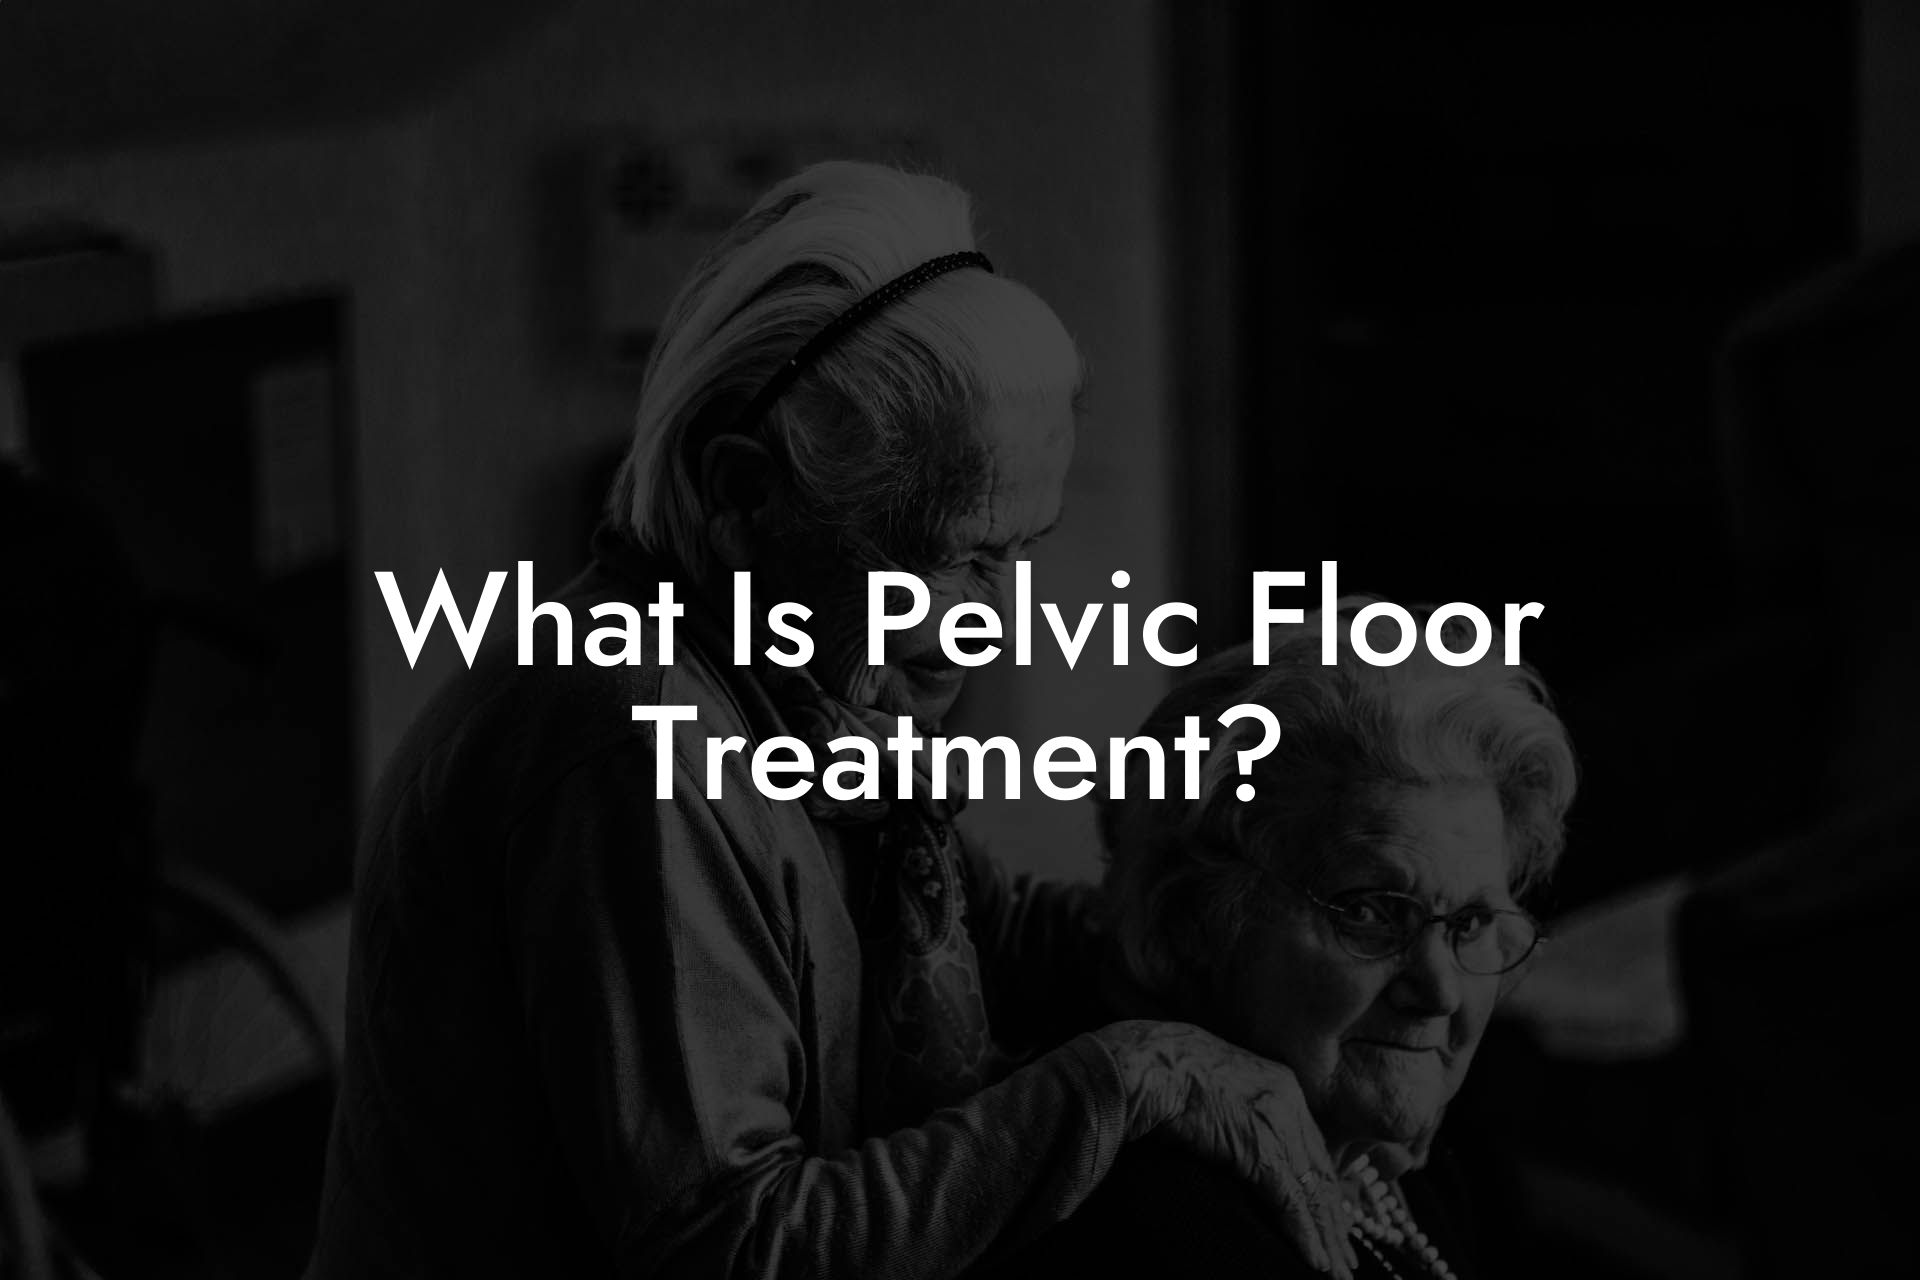 What Is Pelvic Floor Treatment?